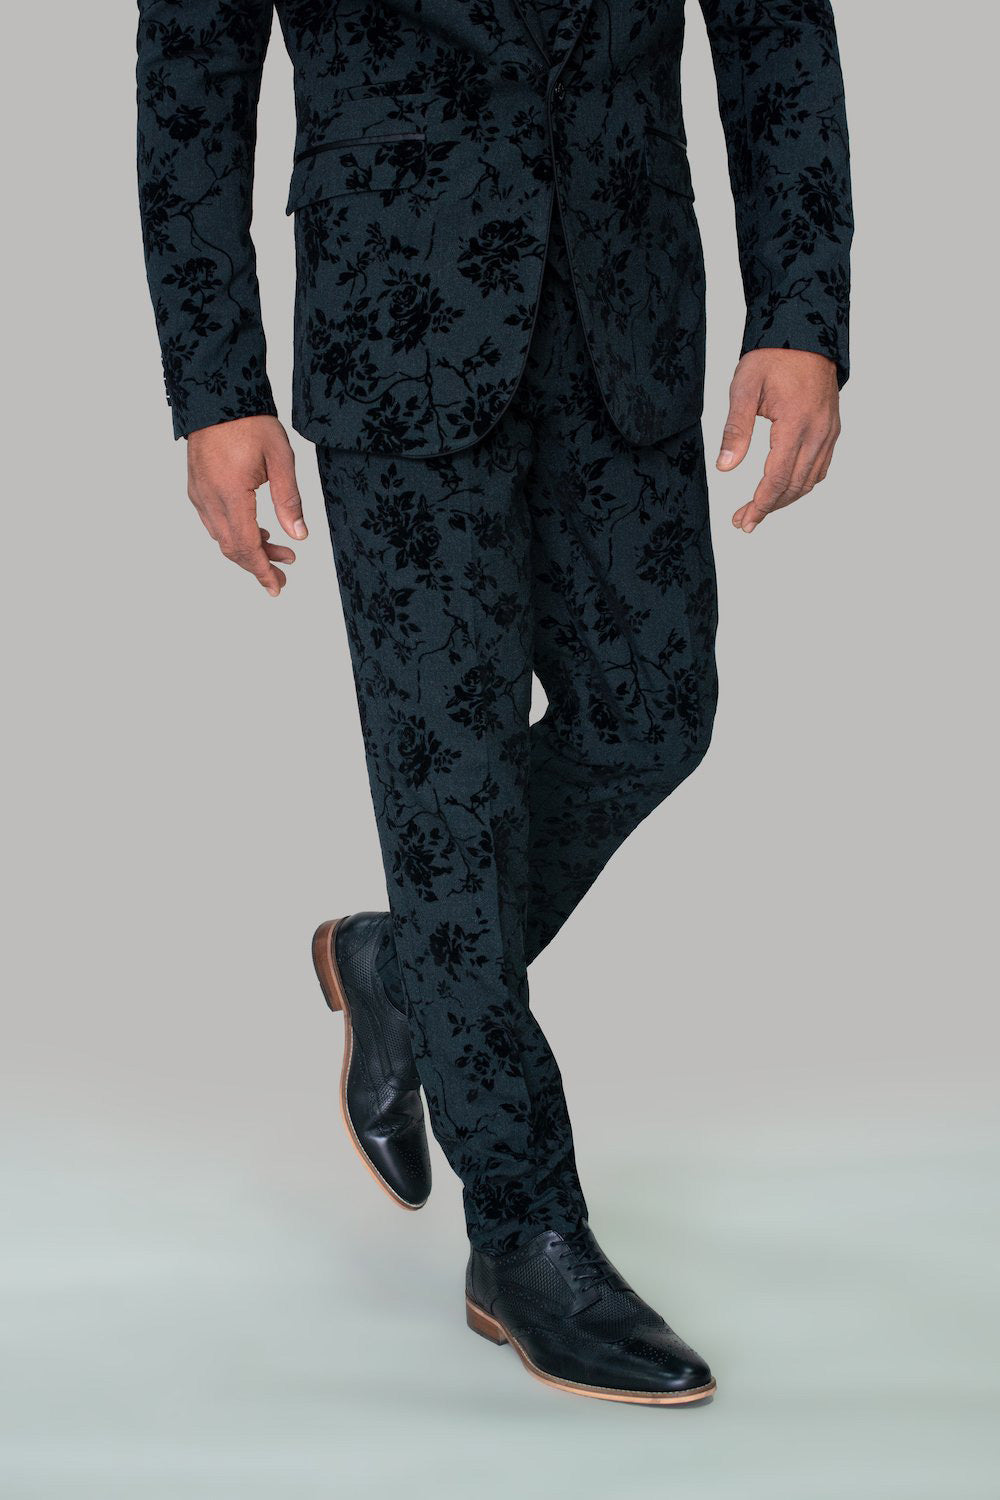 Georgi Black Floral 2 Piece Wedding Suit